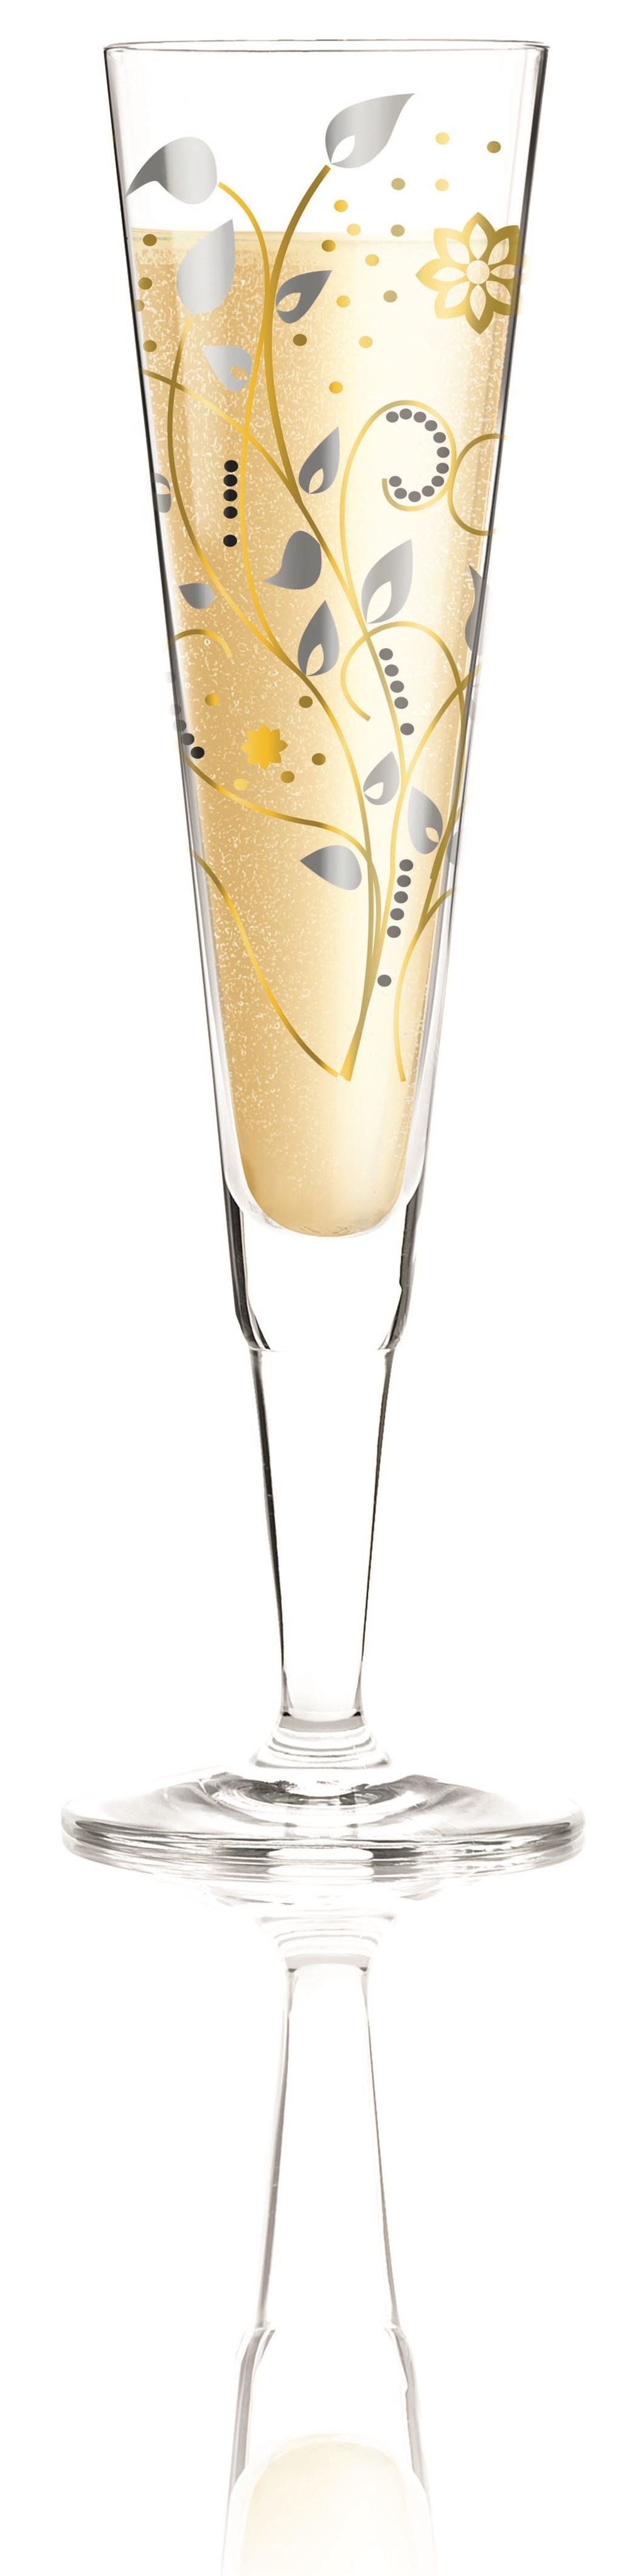 Kozarec za šampanjec/penino champus ladeiro